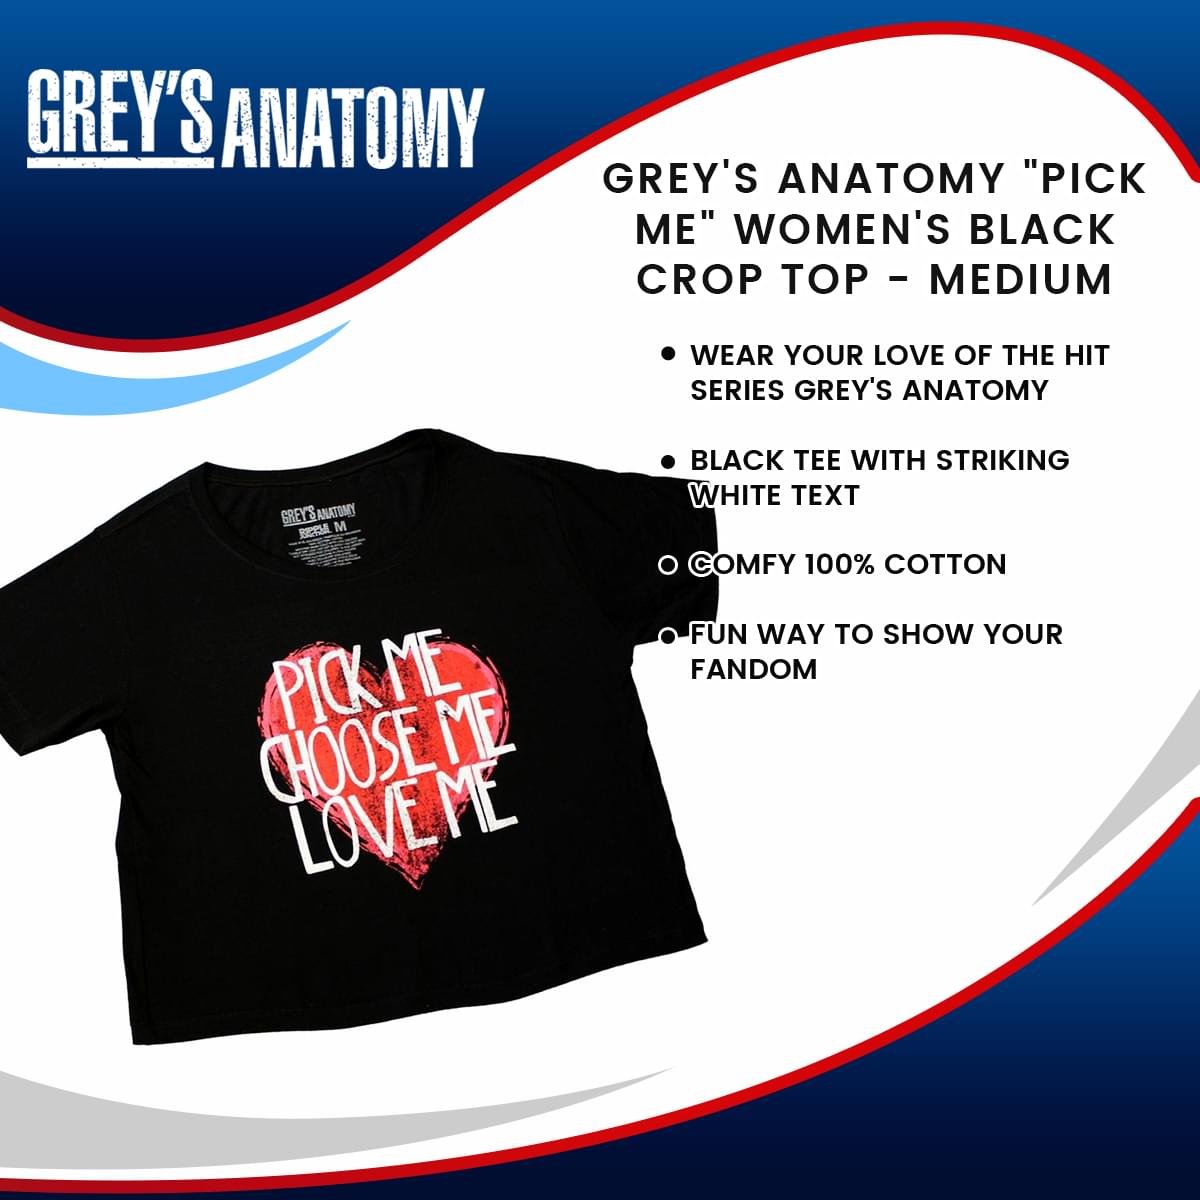 Greys Anatomy "Pick Me" Women's Black Crop Top